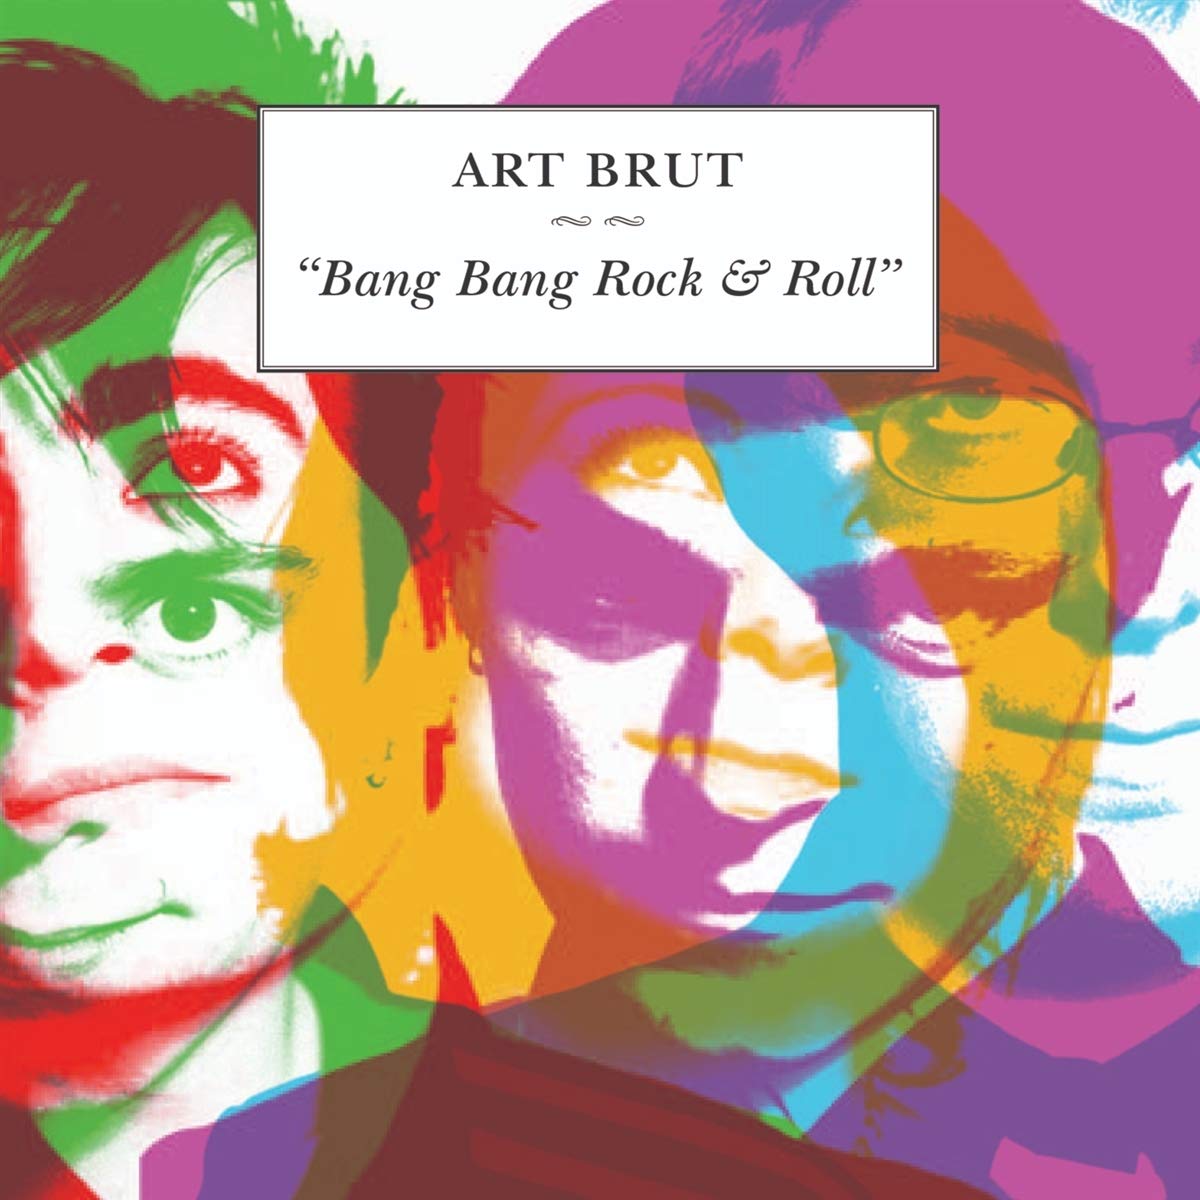 Art Brut "Bang Bang Rock & Roll" LP